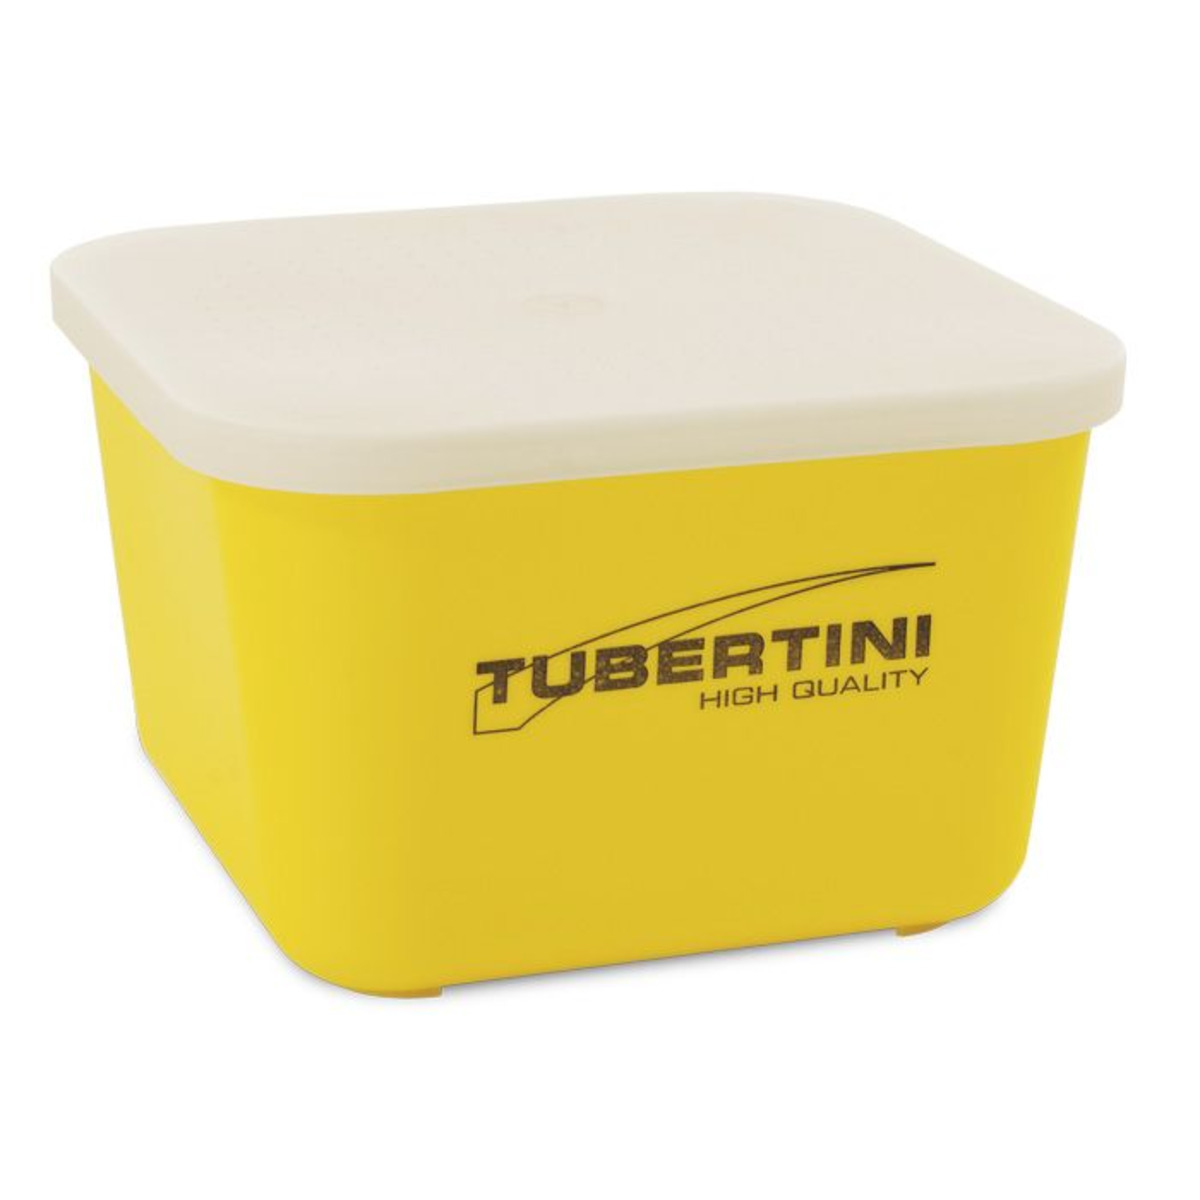 Tubertini Maggot Box - L - 16x16x10 cm - 2 lt.